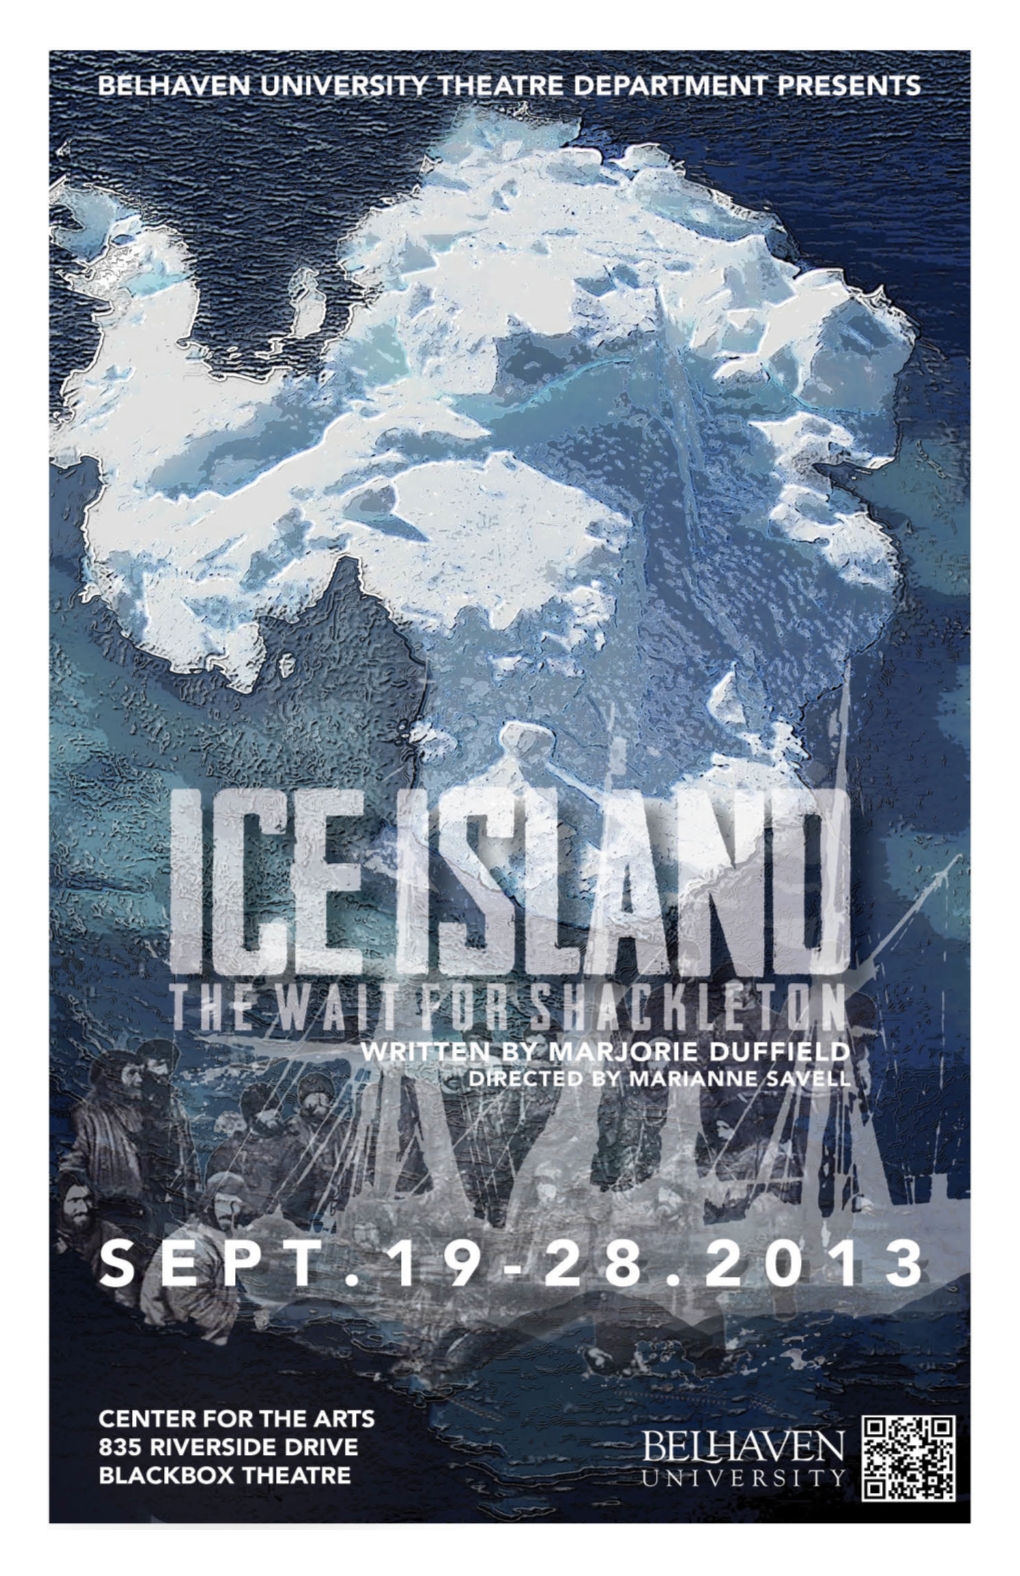 Ice Island: the Wait for Shackleton